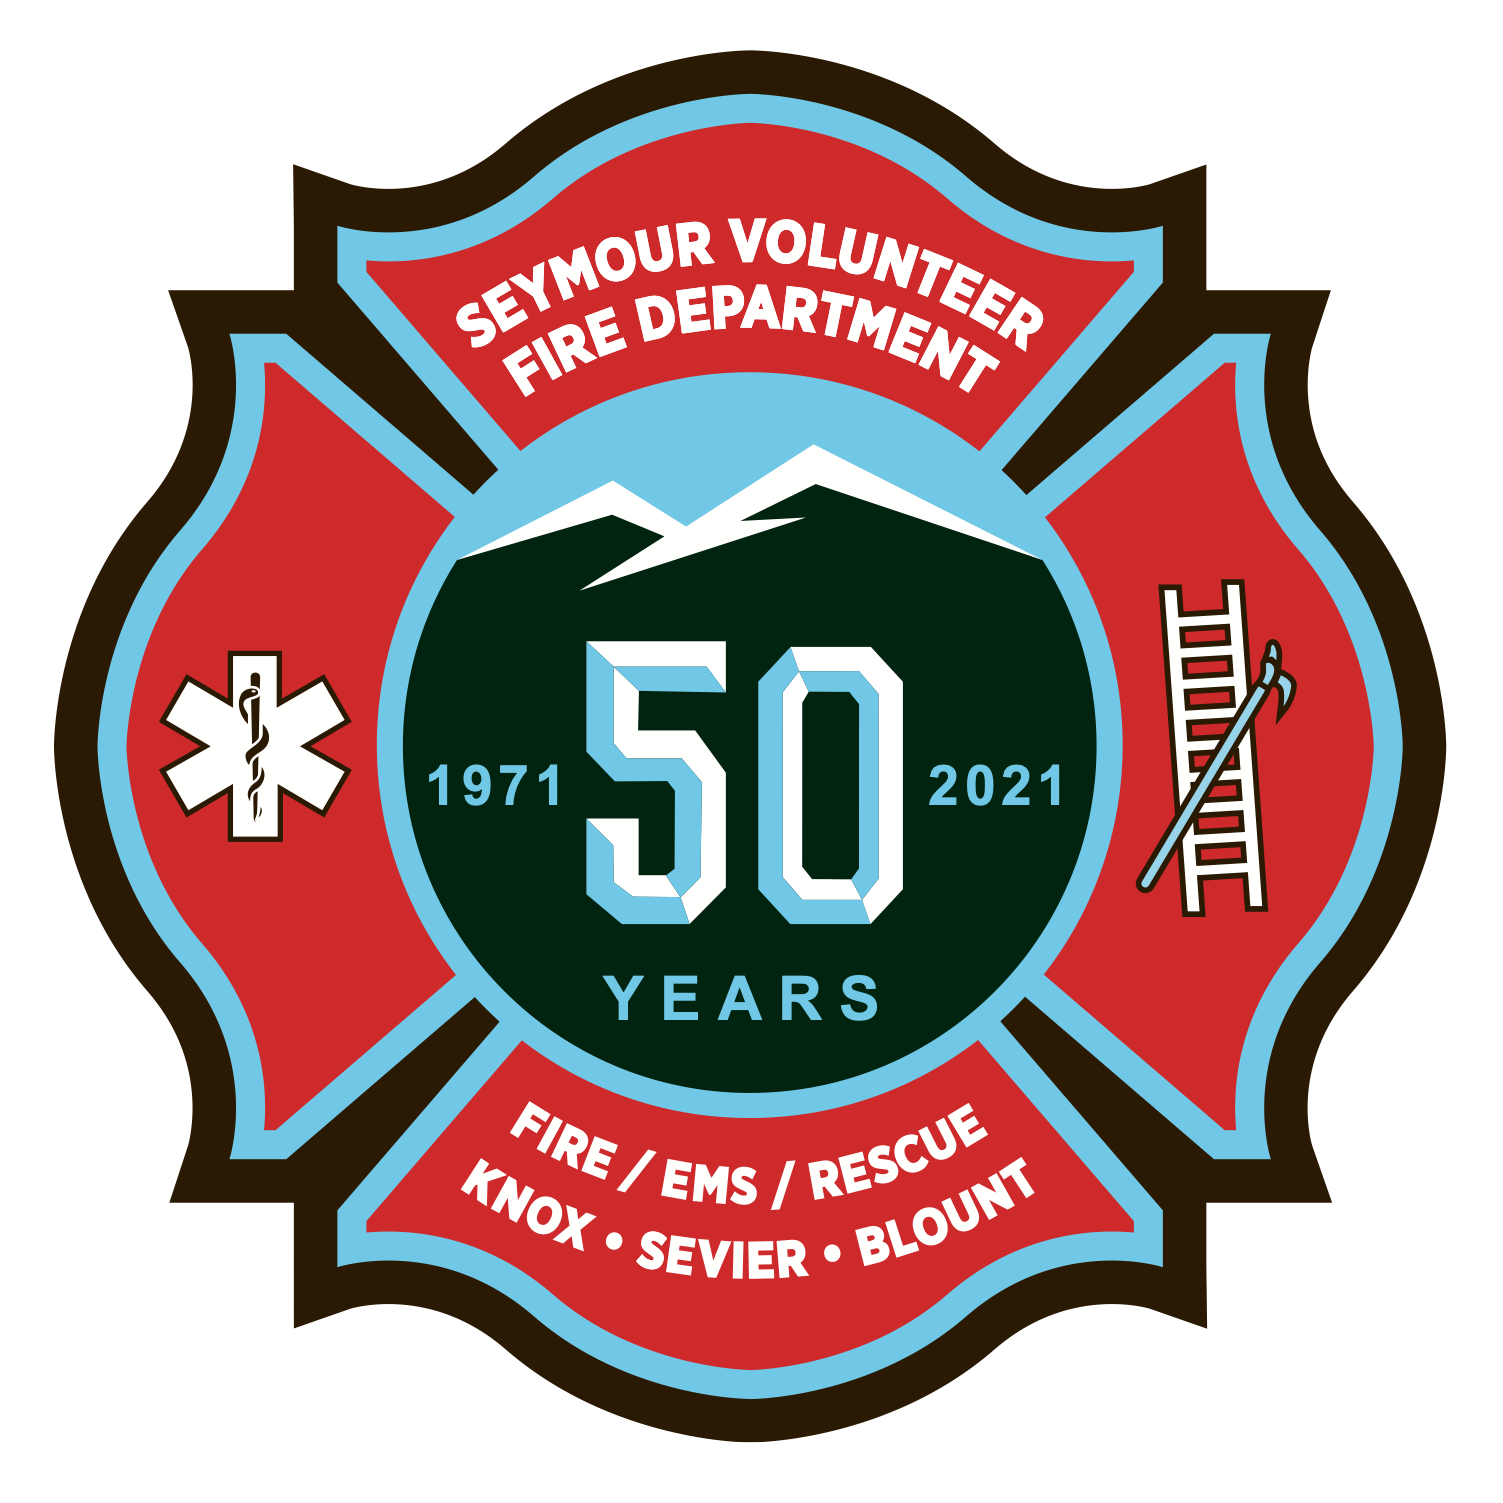 Seymour Volunteer Fire Department logo